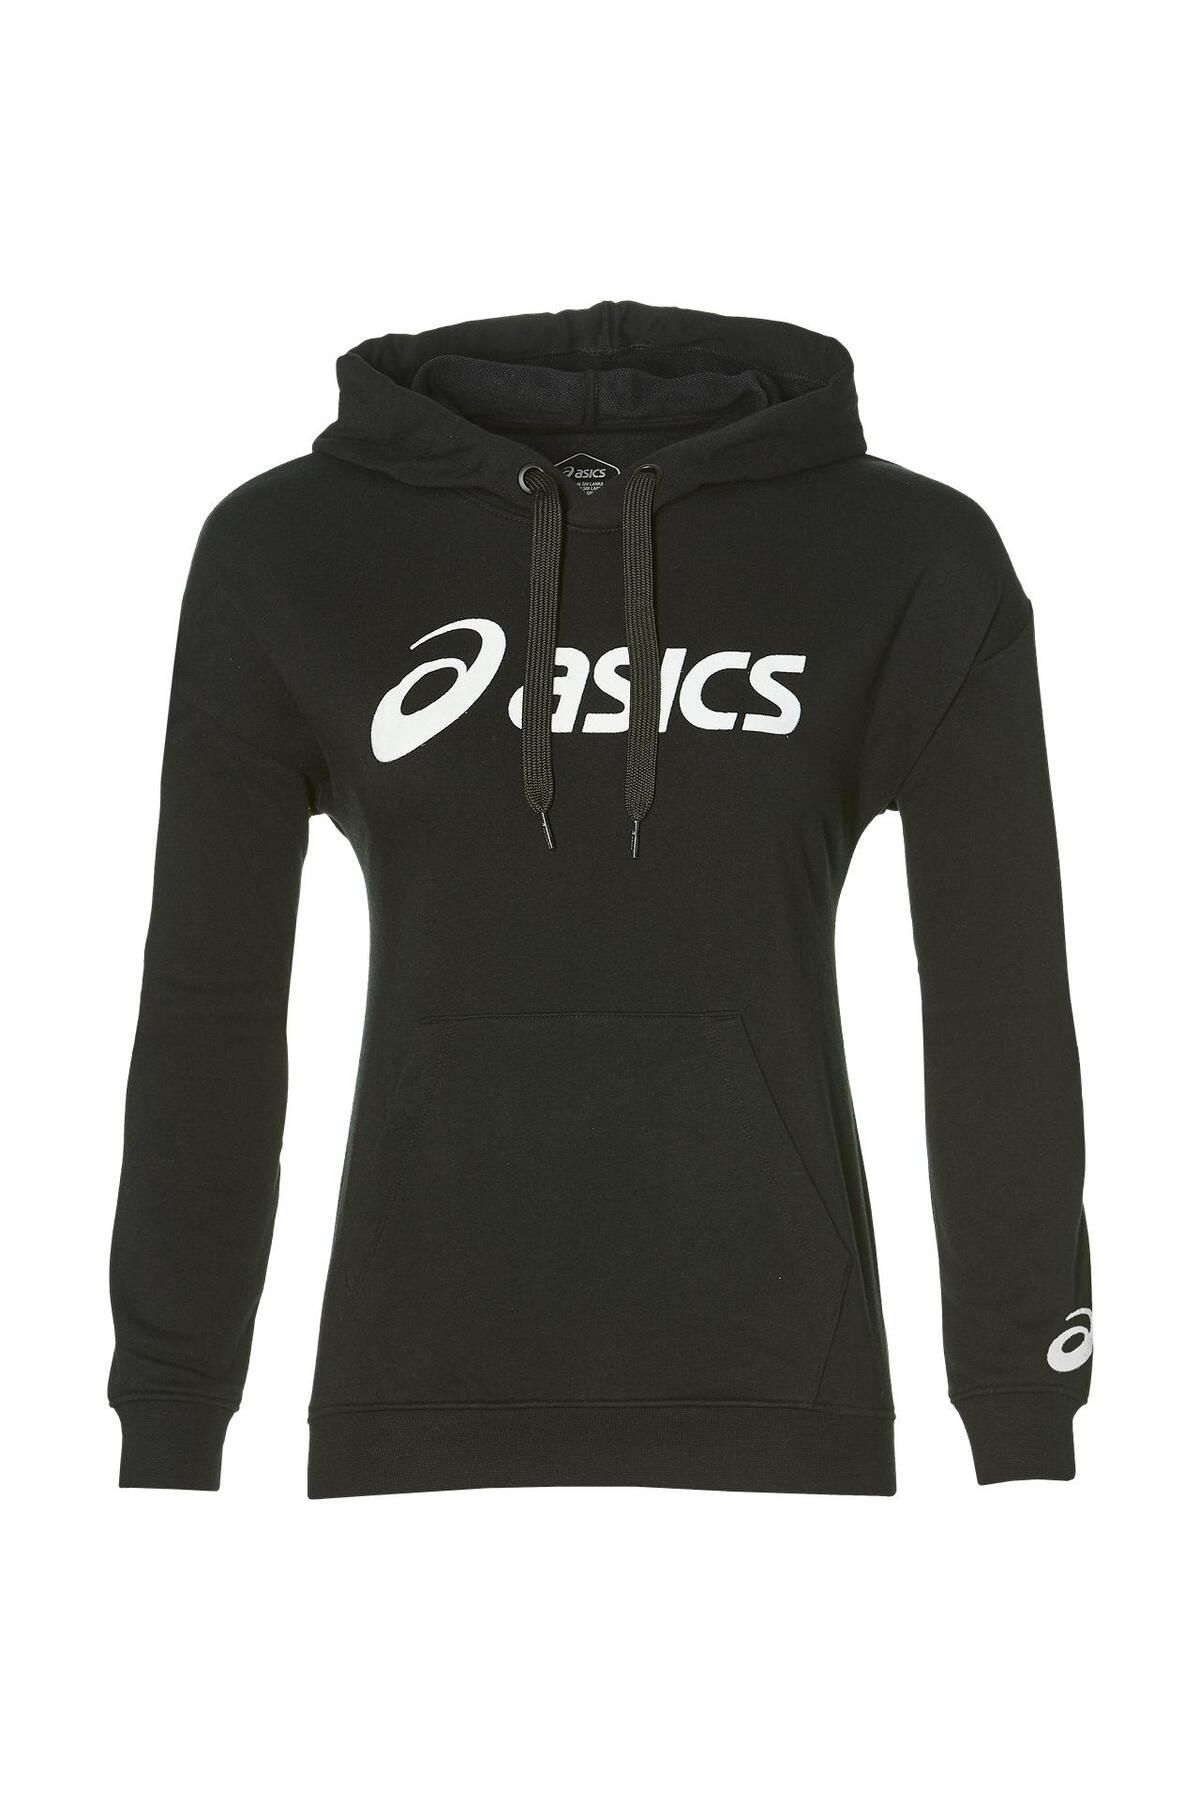 Asics Big Asics Oth Hoodie Kadın Siyah Sweatshirt 2032a990-001